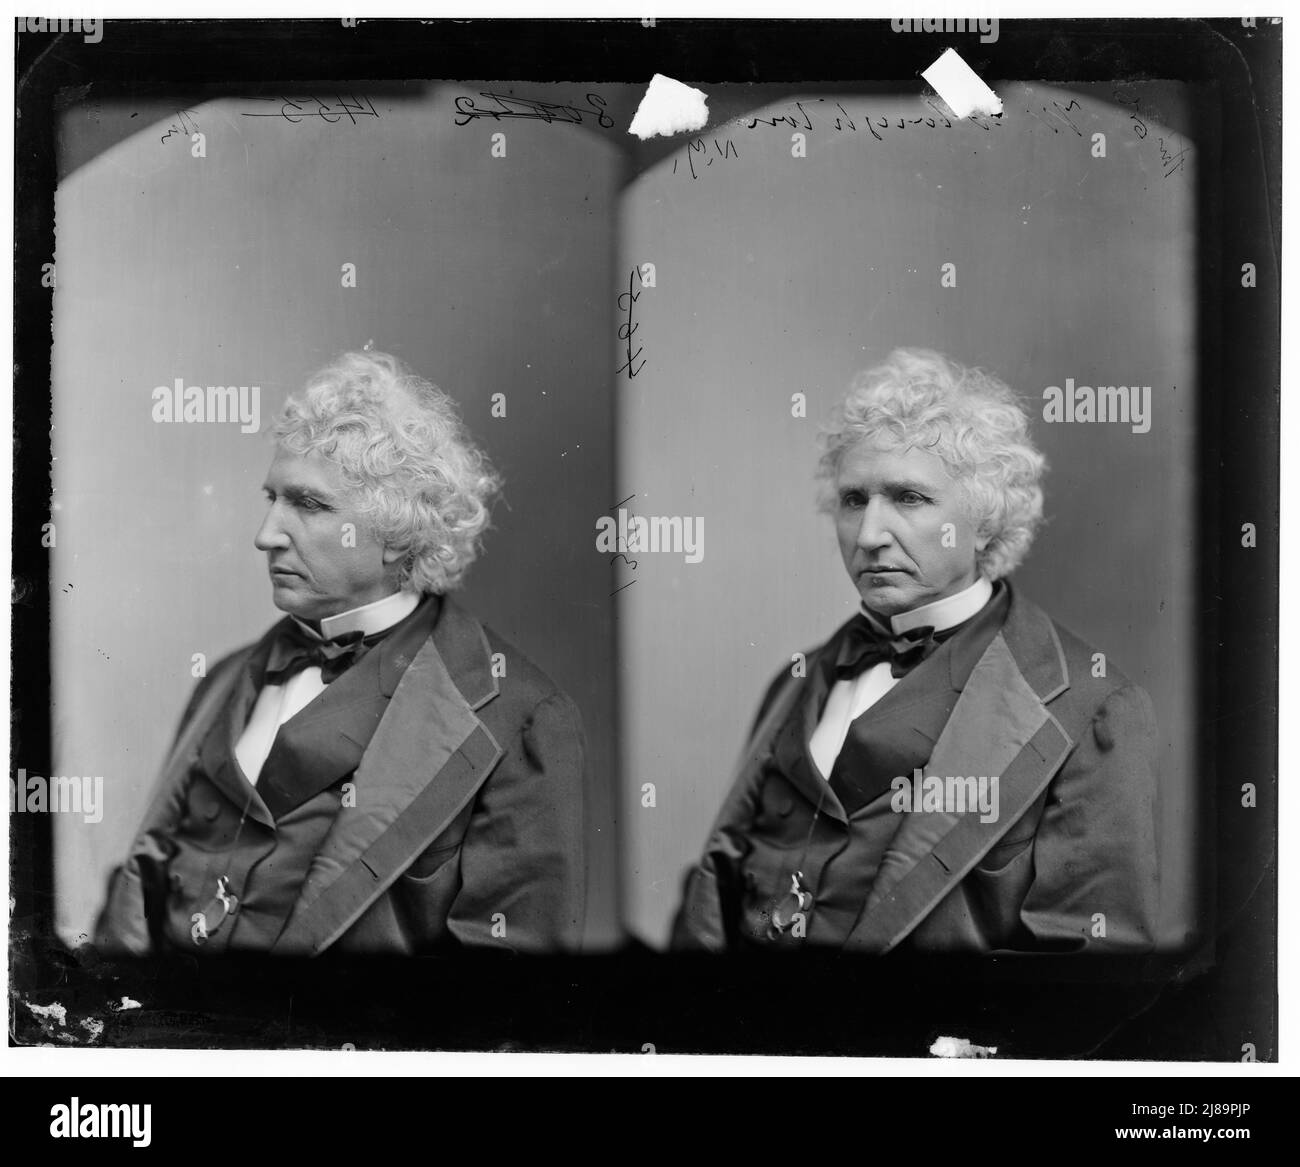 Stoughton, Hon. E.W. of New York, between 1865 and 1880. Stock Photo